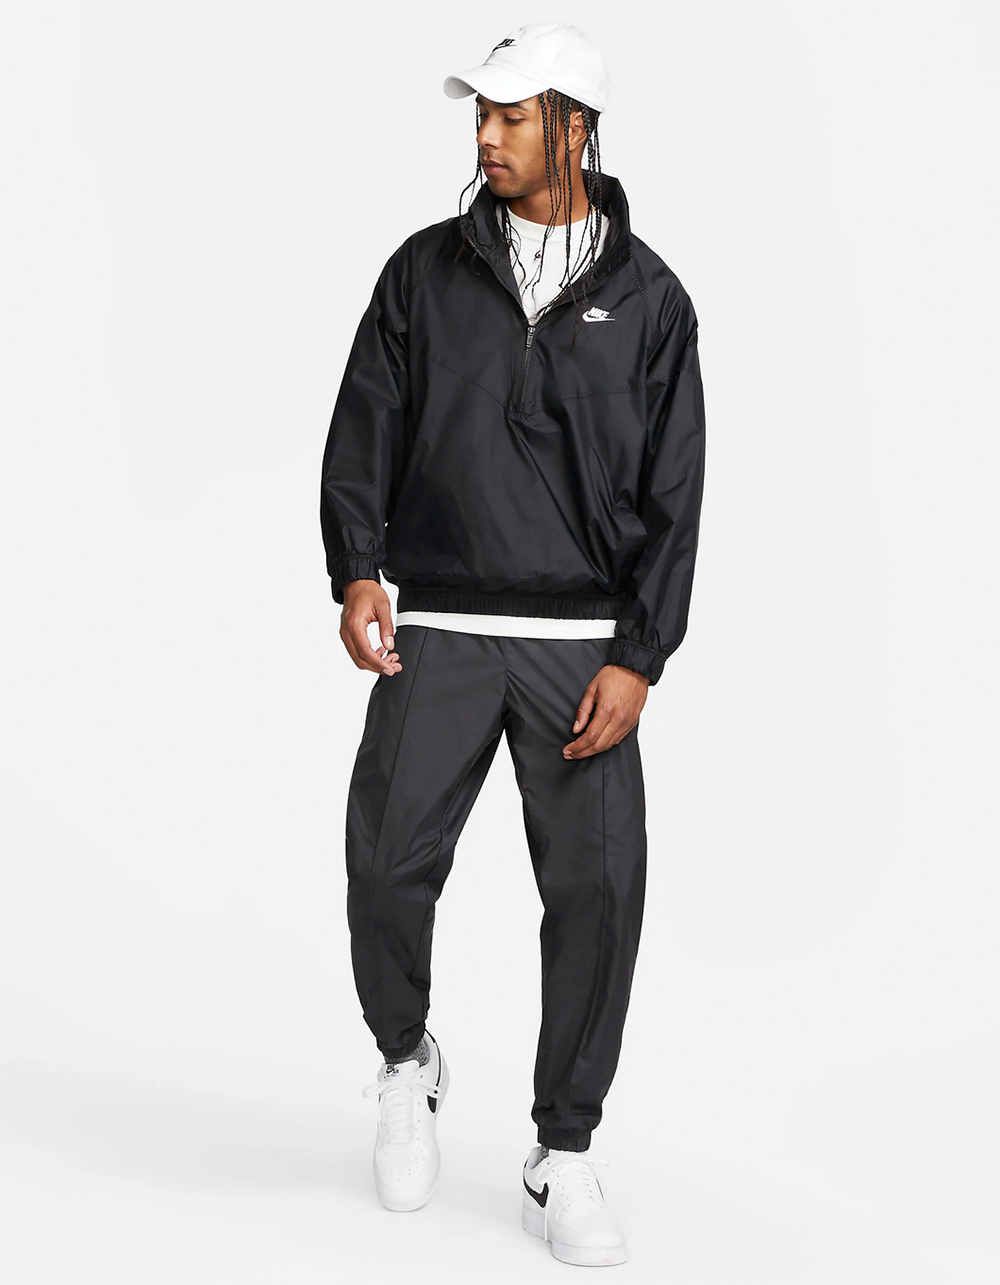 NIKE Sportswear Windrunner Anorak Mens Jacket - BLACK